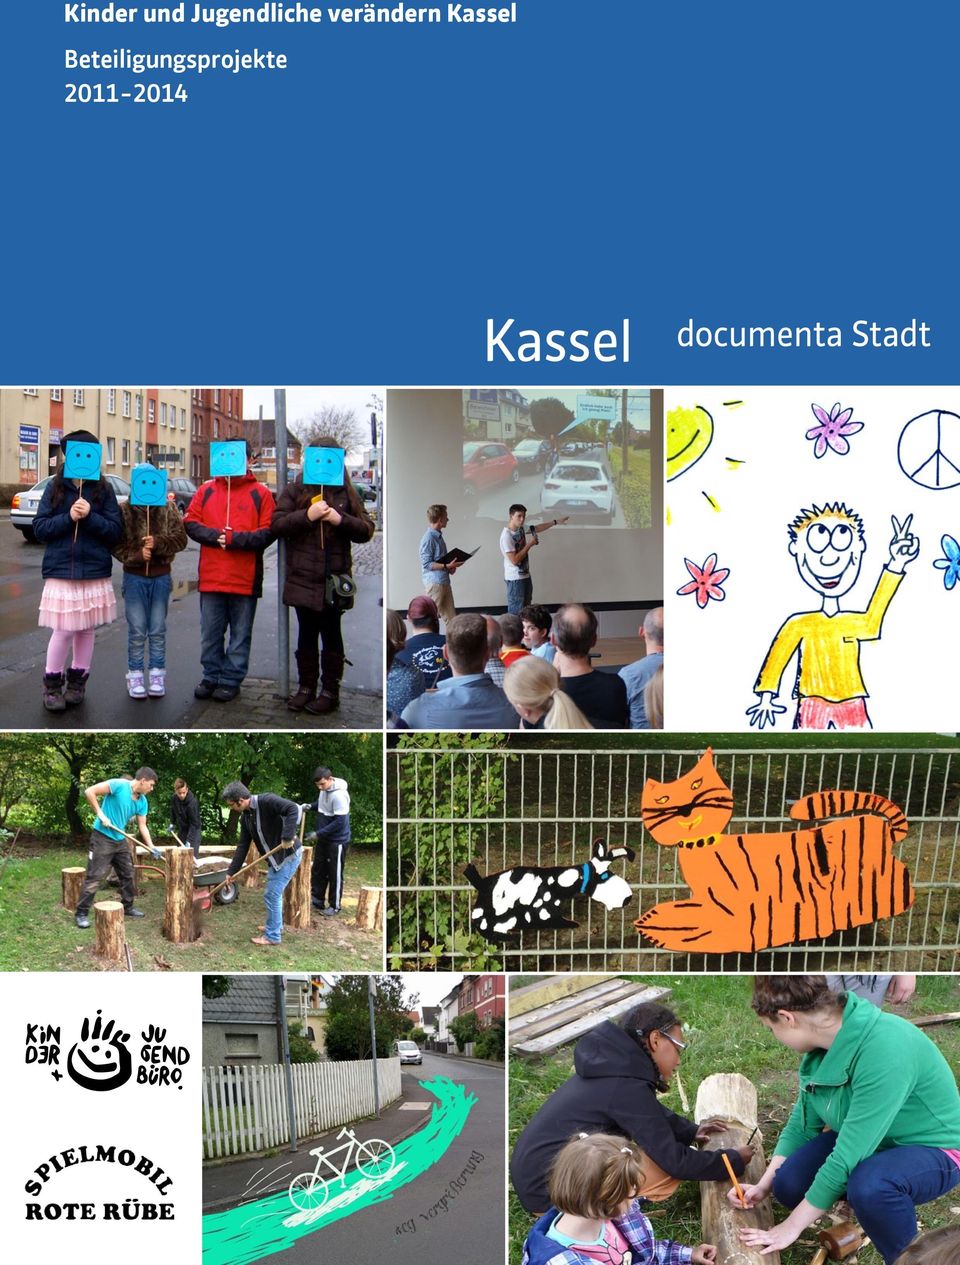 verändern Kassel